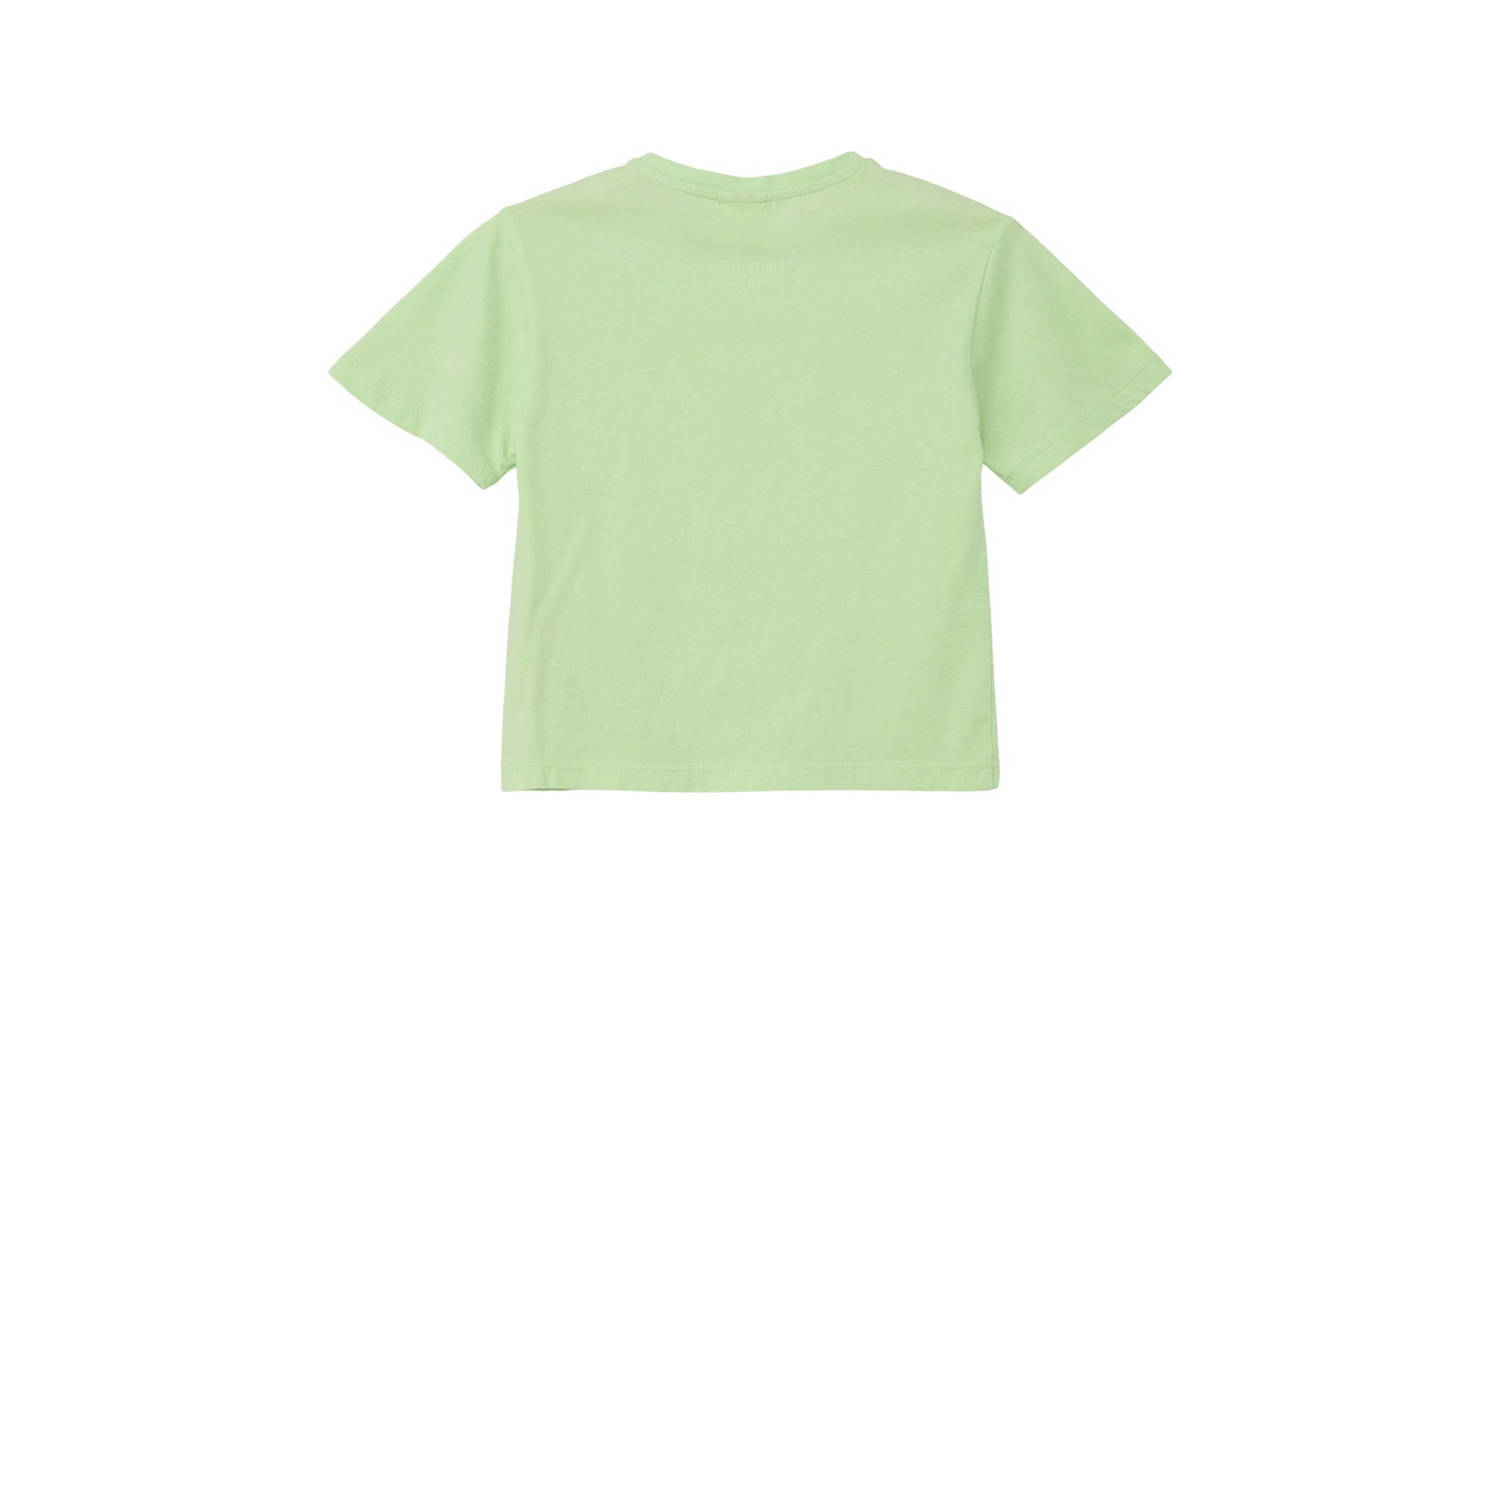 s.Oliver T-shirt met printopdruk groen